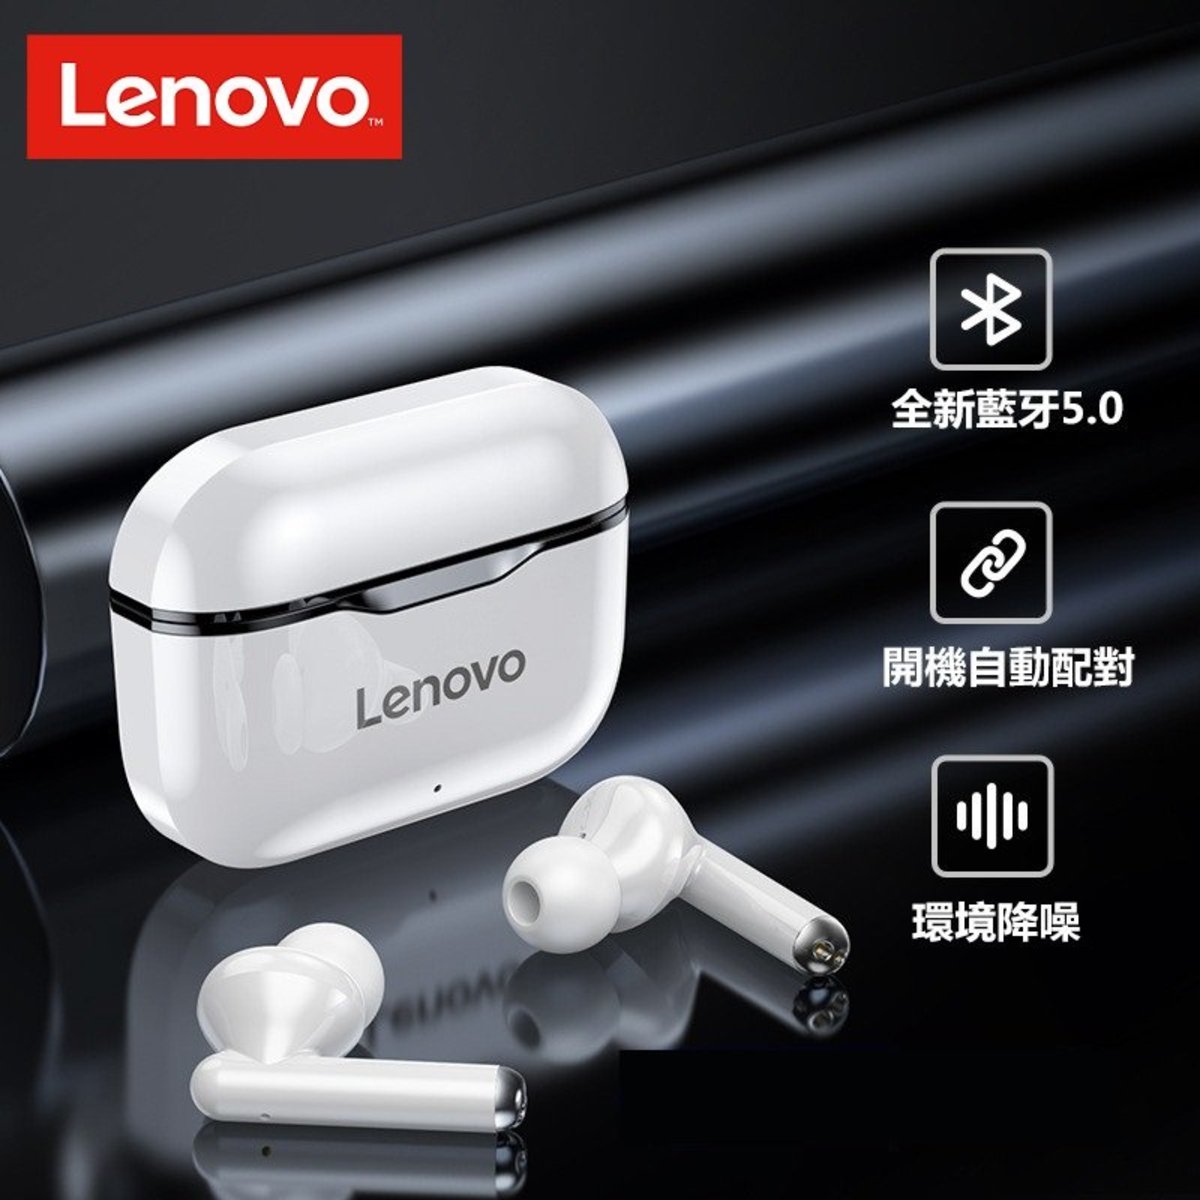 Original Lenovo LivePods LP1 | Buy Online At Best Price In ...